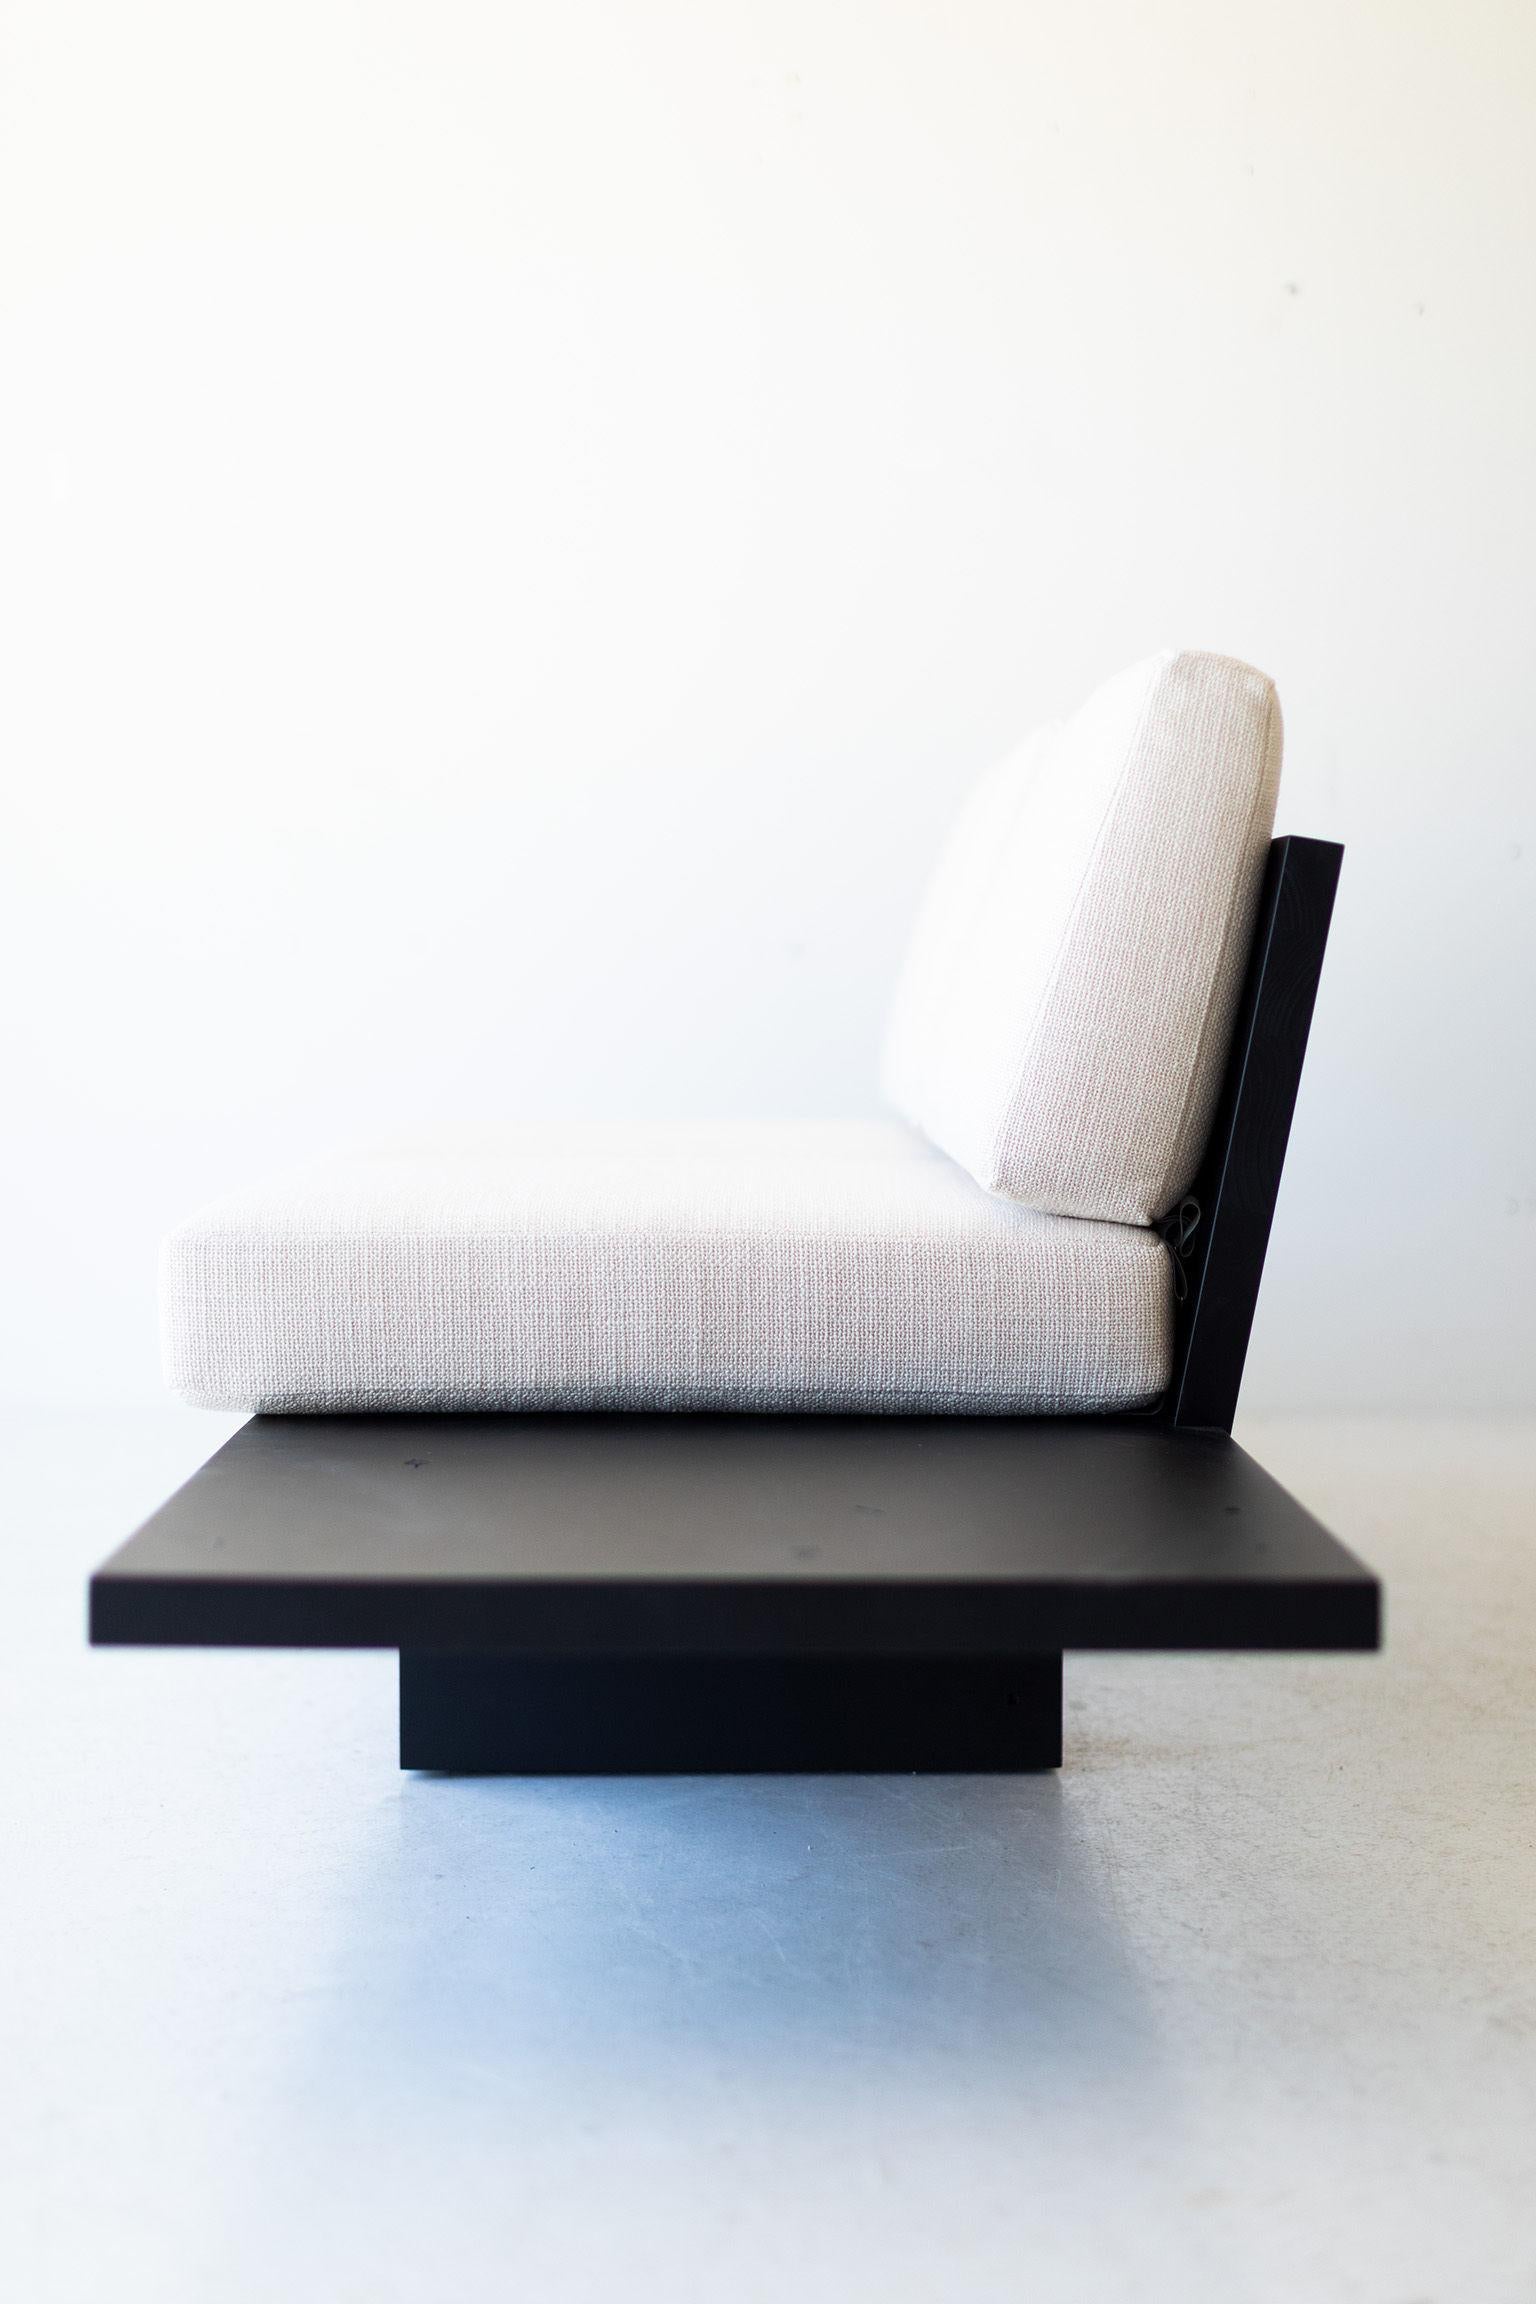 American Suelo Modern Platform Sofa For Sale